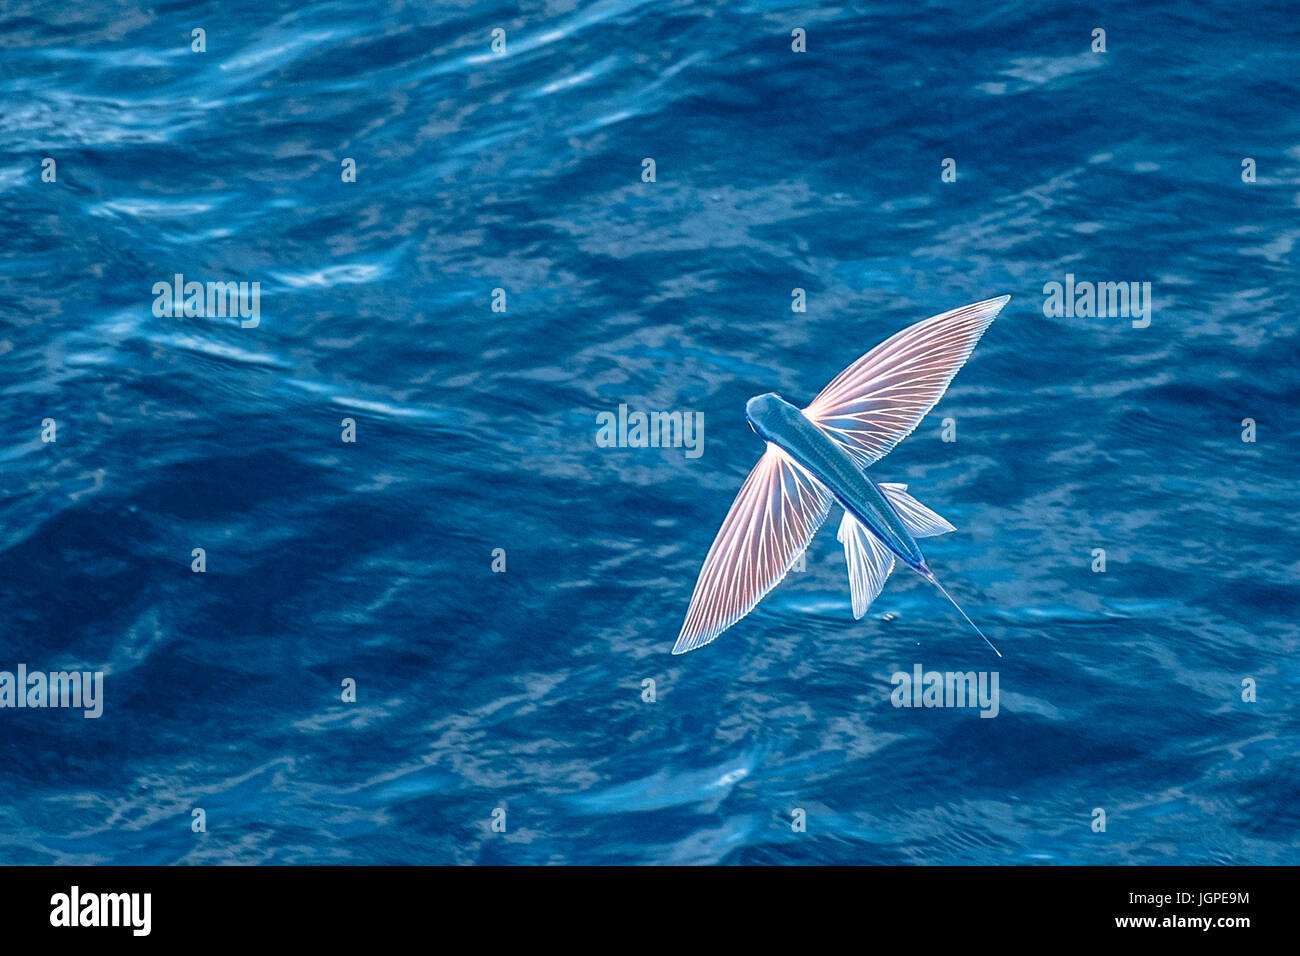 Sailfin Flying Fish, Parexocoetus brachypterus, in mid air, several hundred miles off Mauritania, North Africa, North Atlantic Ocean Stock Photo